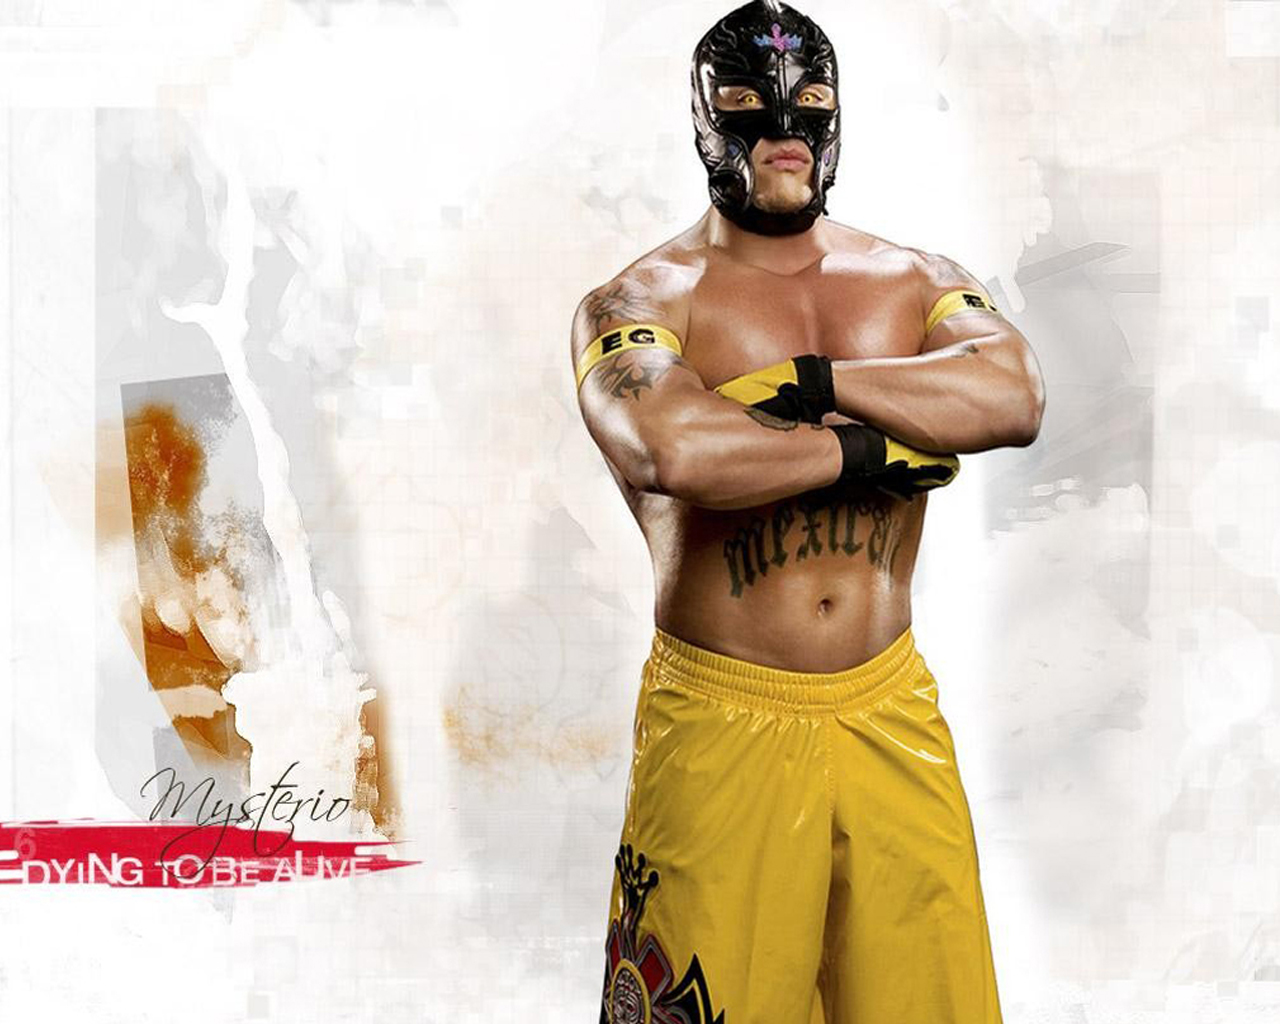 https://blogger.googleusercontent.com/img/b/R29vZ2xl/AVvXsEi-zR-cPO2HmTUjPwS48nMg7fuyyzchyphenhyphenQC6gqhF2Y9MoC8S5p0Pecm56OKAtfZoWdJOjyp9baslfNqjkMBcx7bKoBVVMDnRNSNN6LyWmZJjfsQzm0v-84ZkImAPiS-zc4jMzdSkjwuh4aox/s1600/American+WWE+Superstar+Wrestler+Rey+Mysterio+Wallpapers+2012.jpg